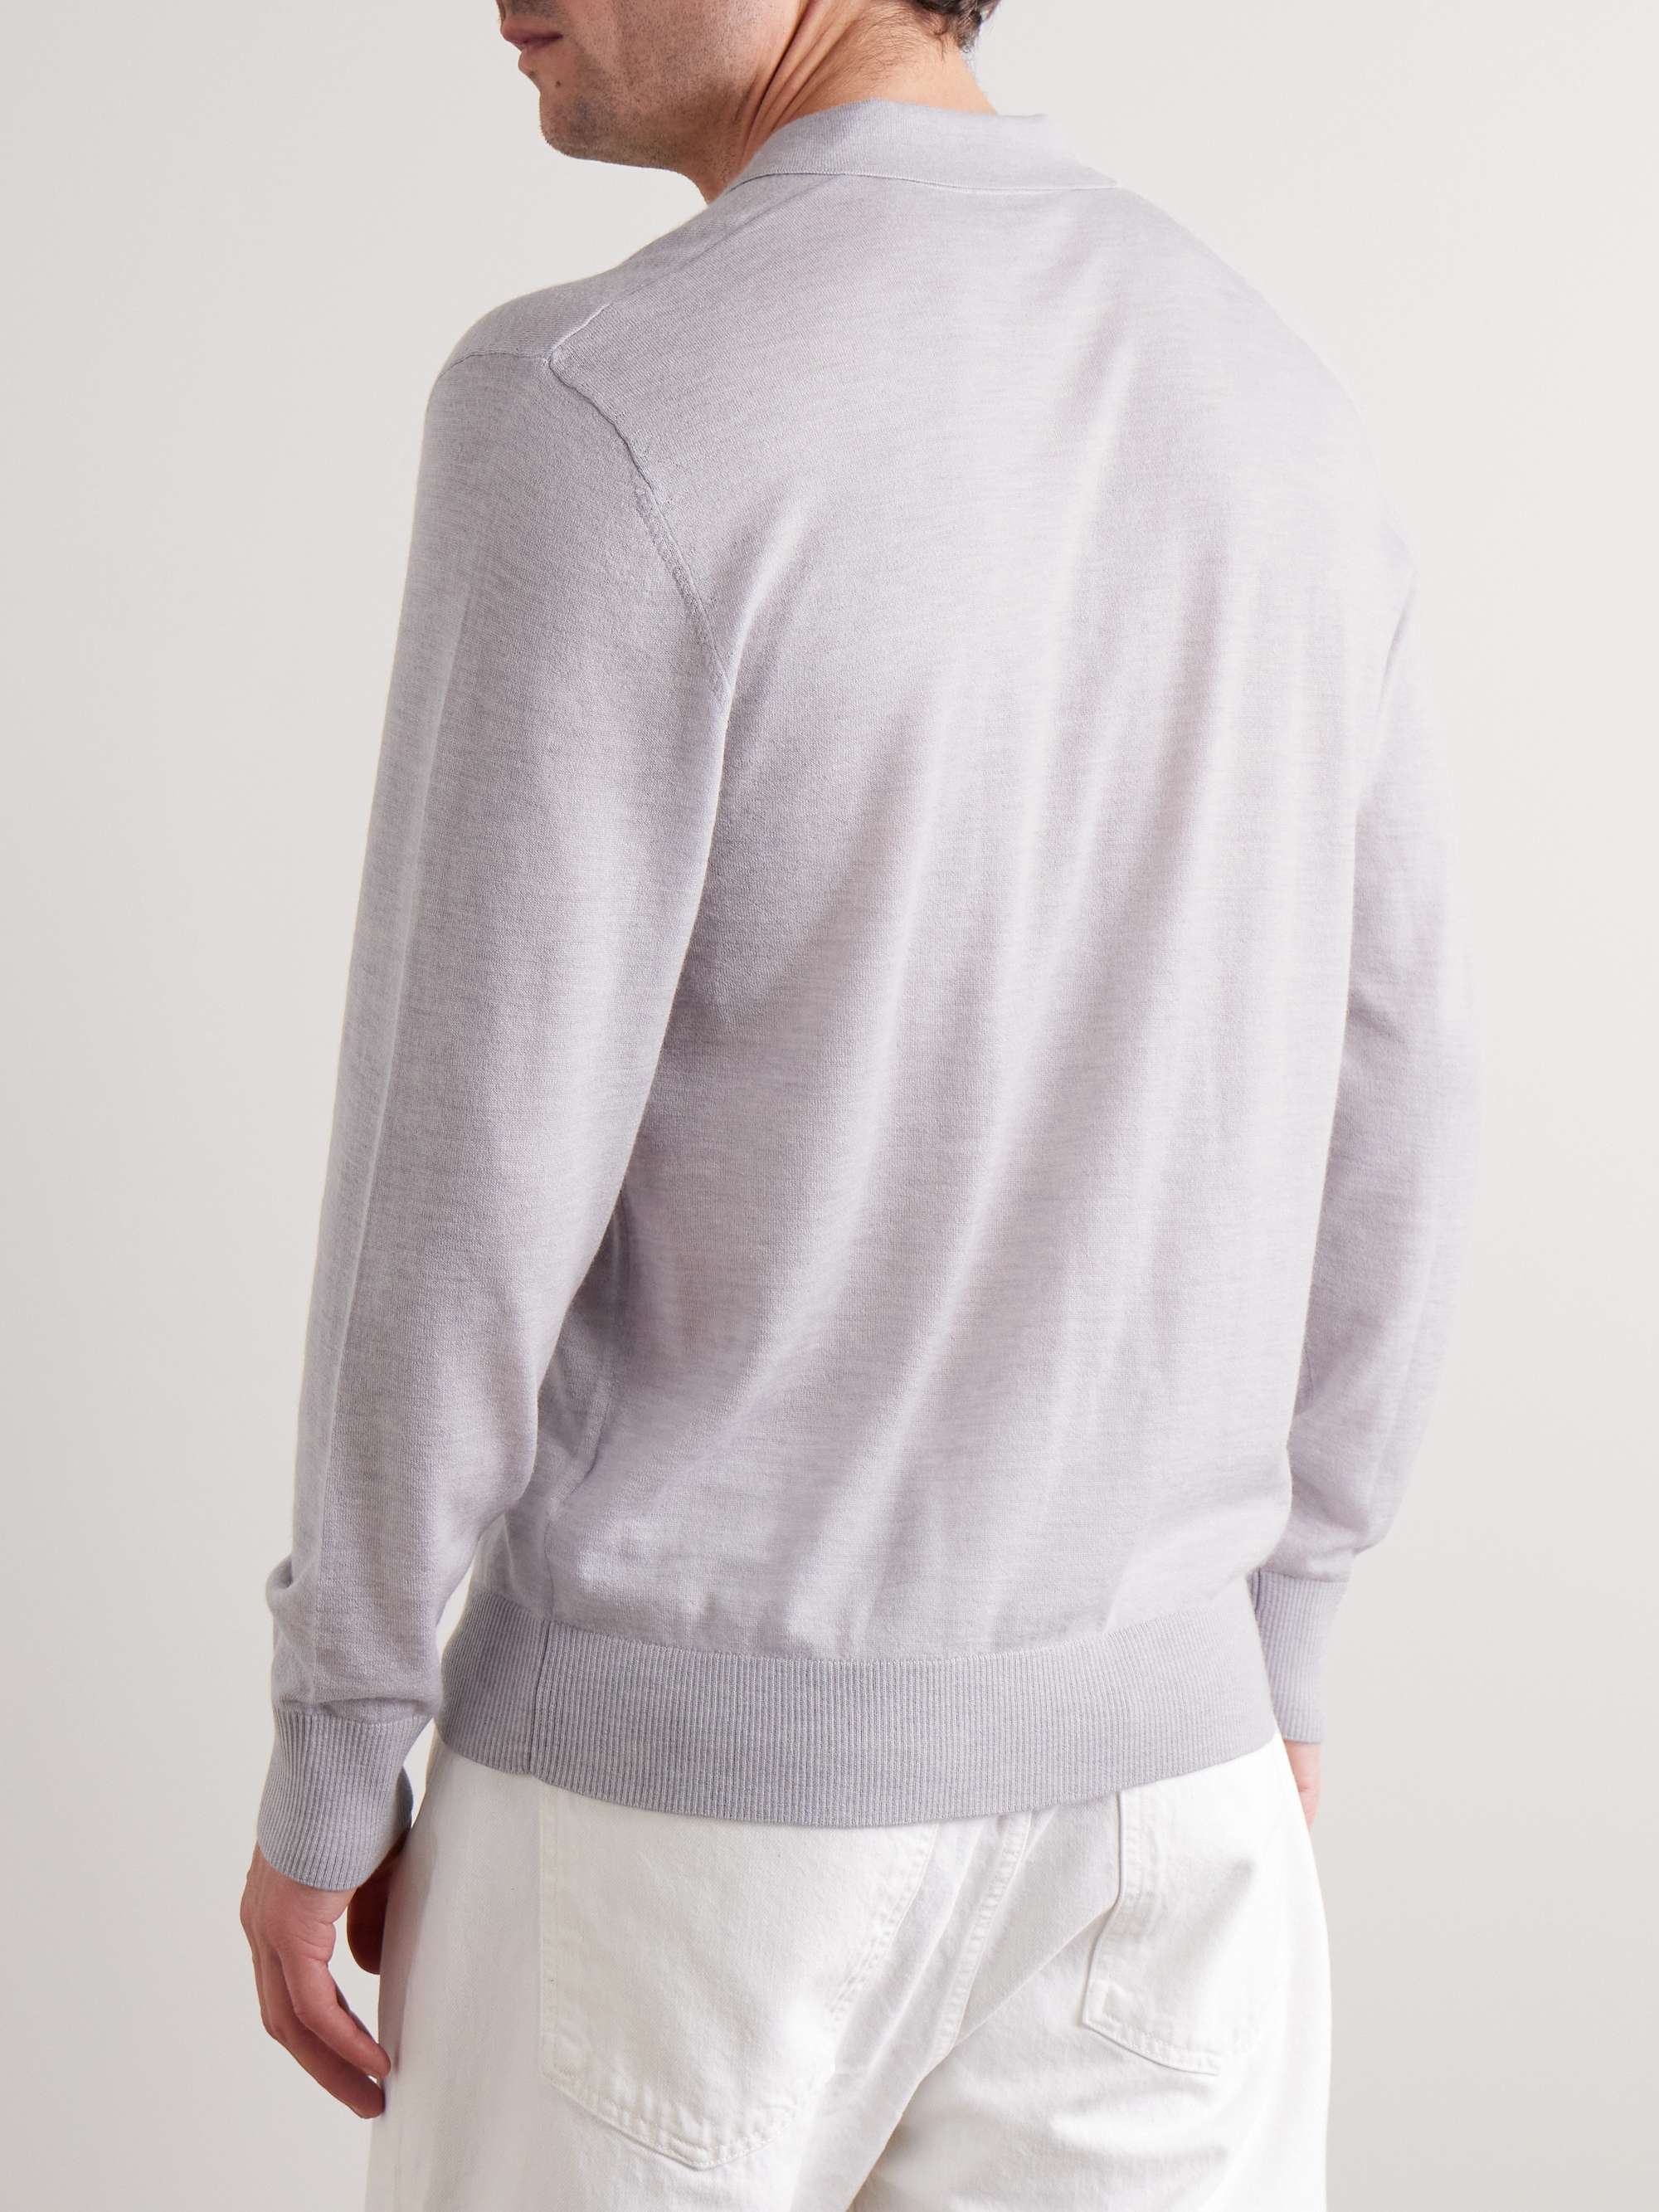 JAMES PERSE Cashmere Polo Shirt for Men | MR PORTER